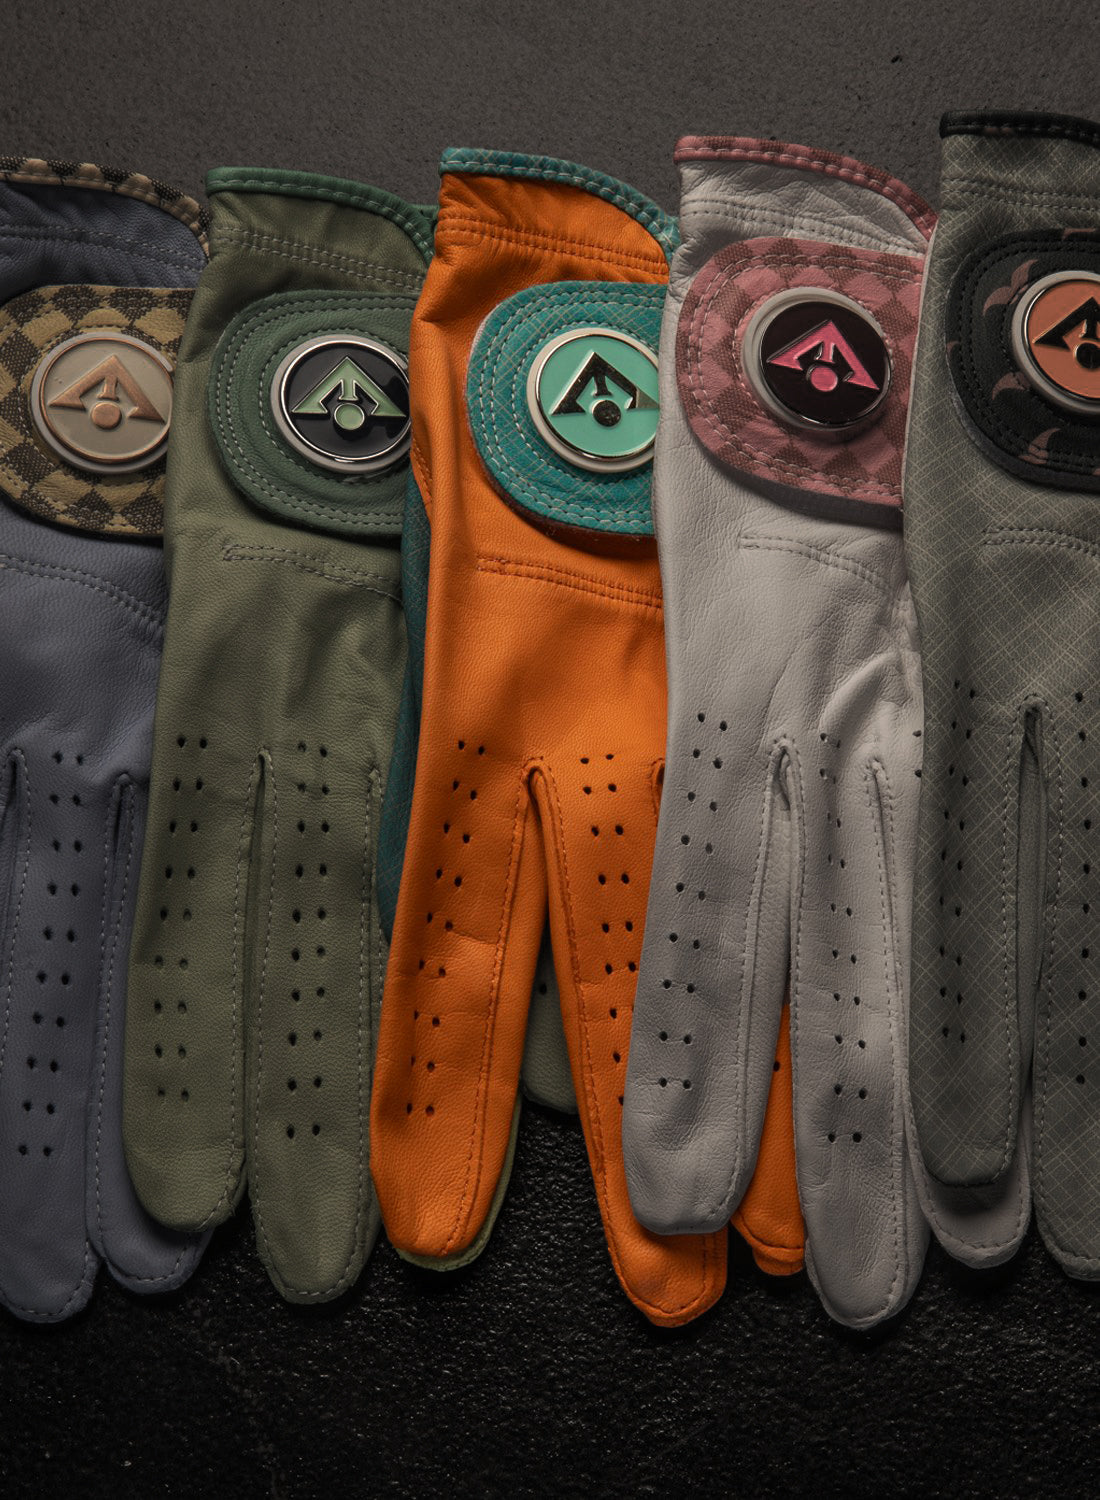 Variety of designer golf gloves across different colors for VivanTee Golf.